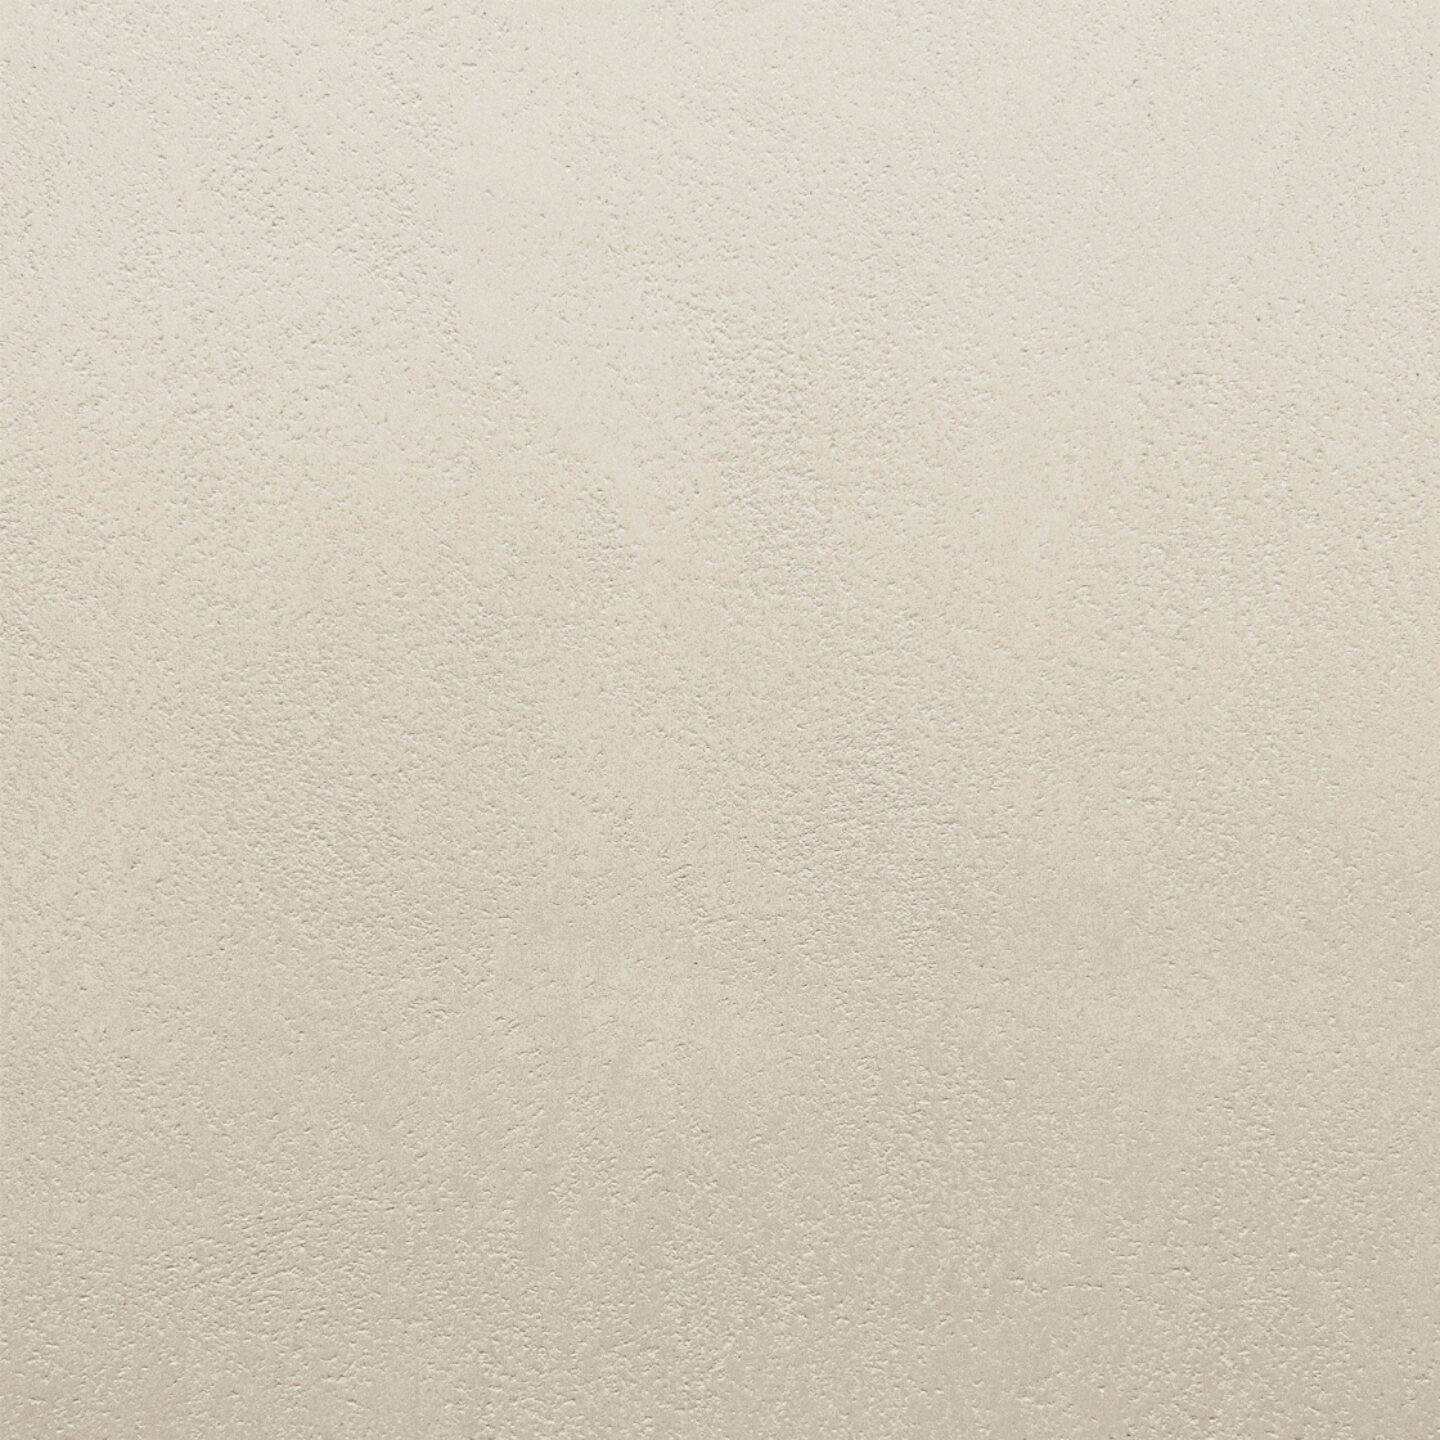 Close up of Armourcoat leatherstone exterior polished plaster finish - 46